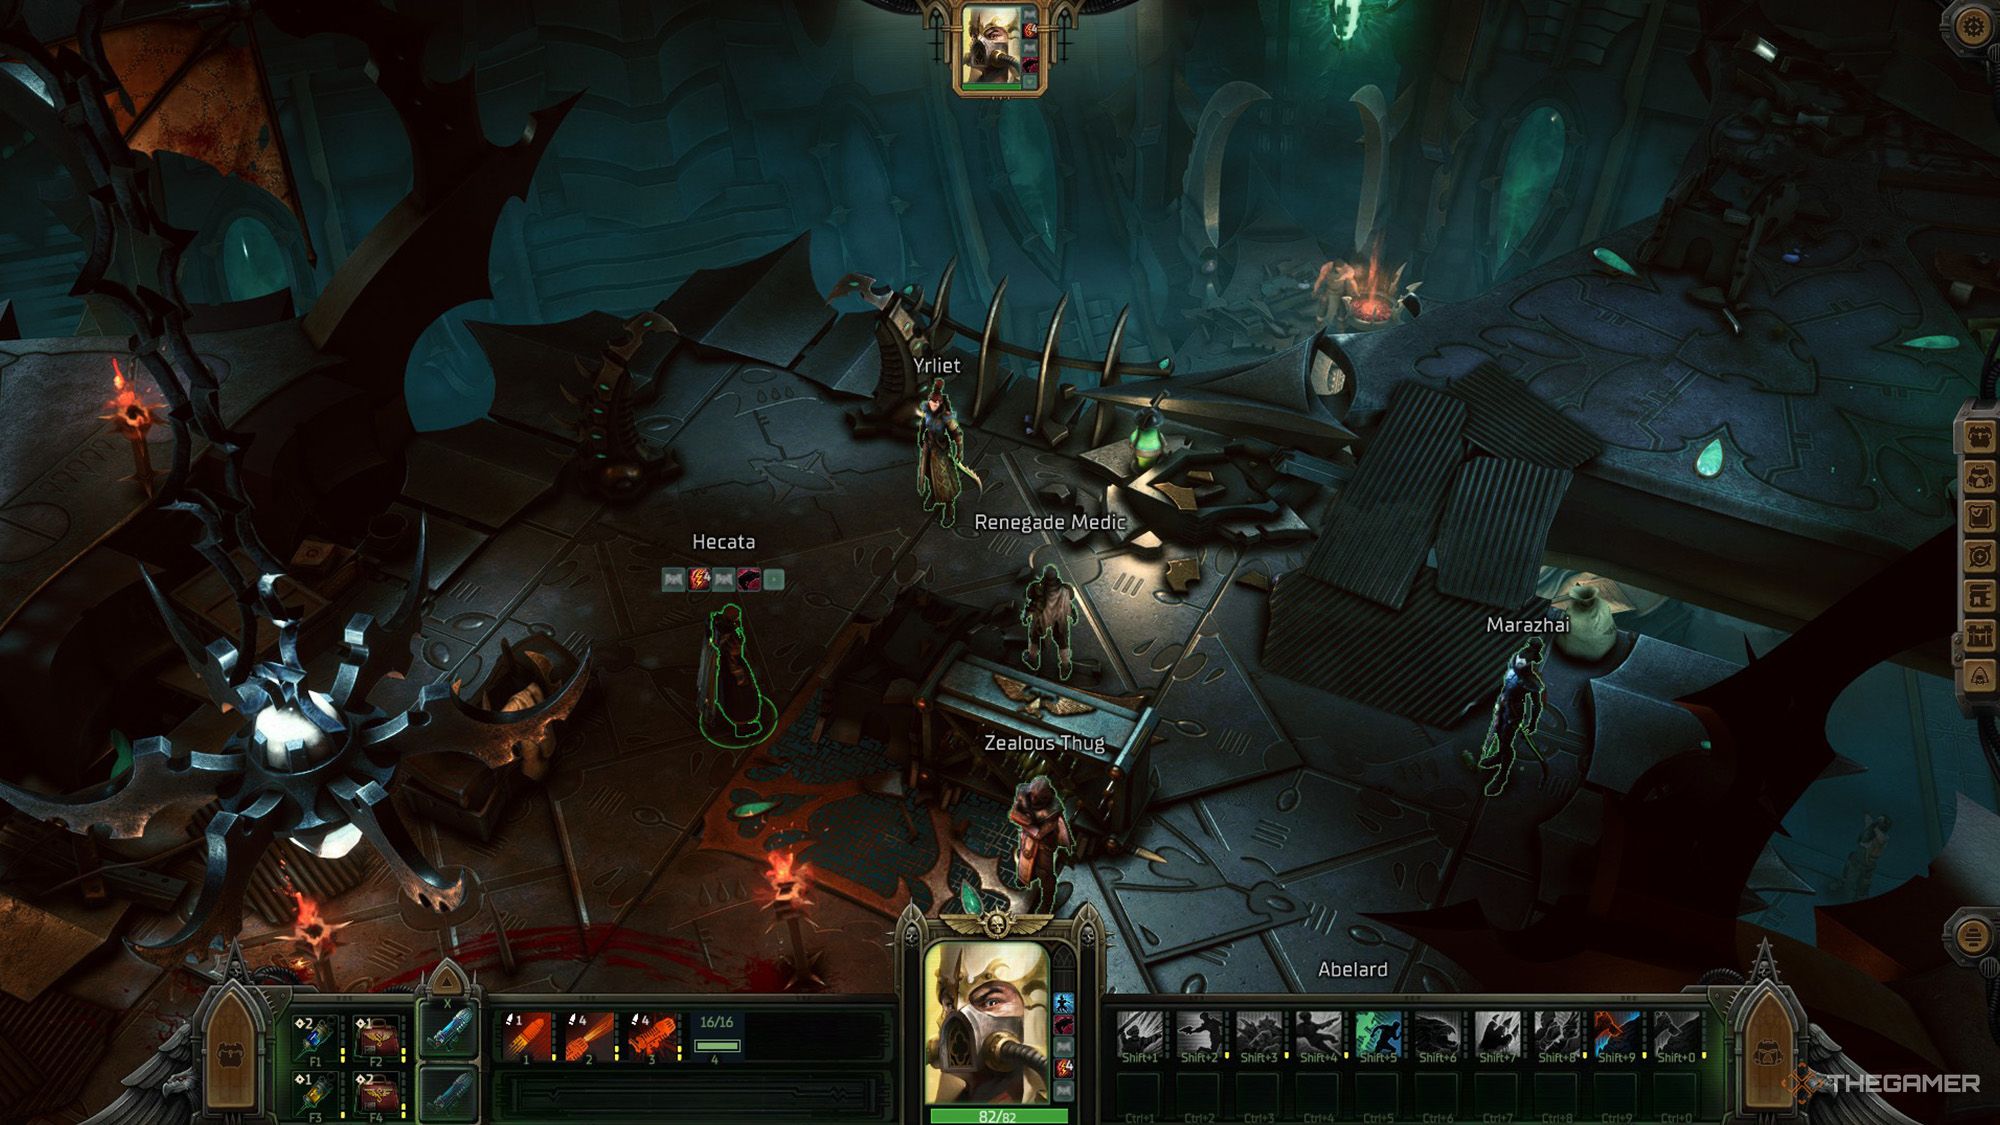 Warhammer 40000 Rogue Trader - Yrliet's Location In the Pit